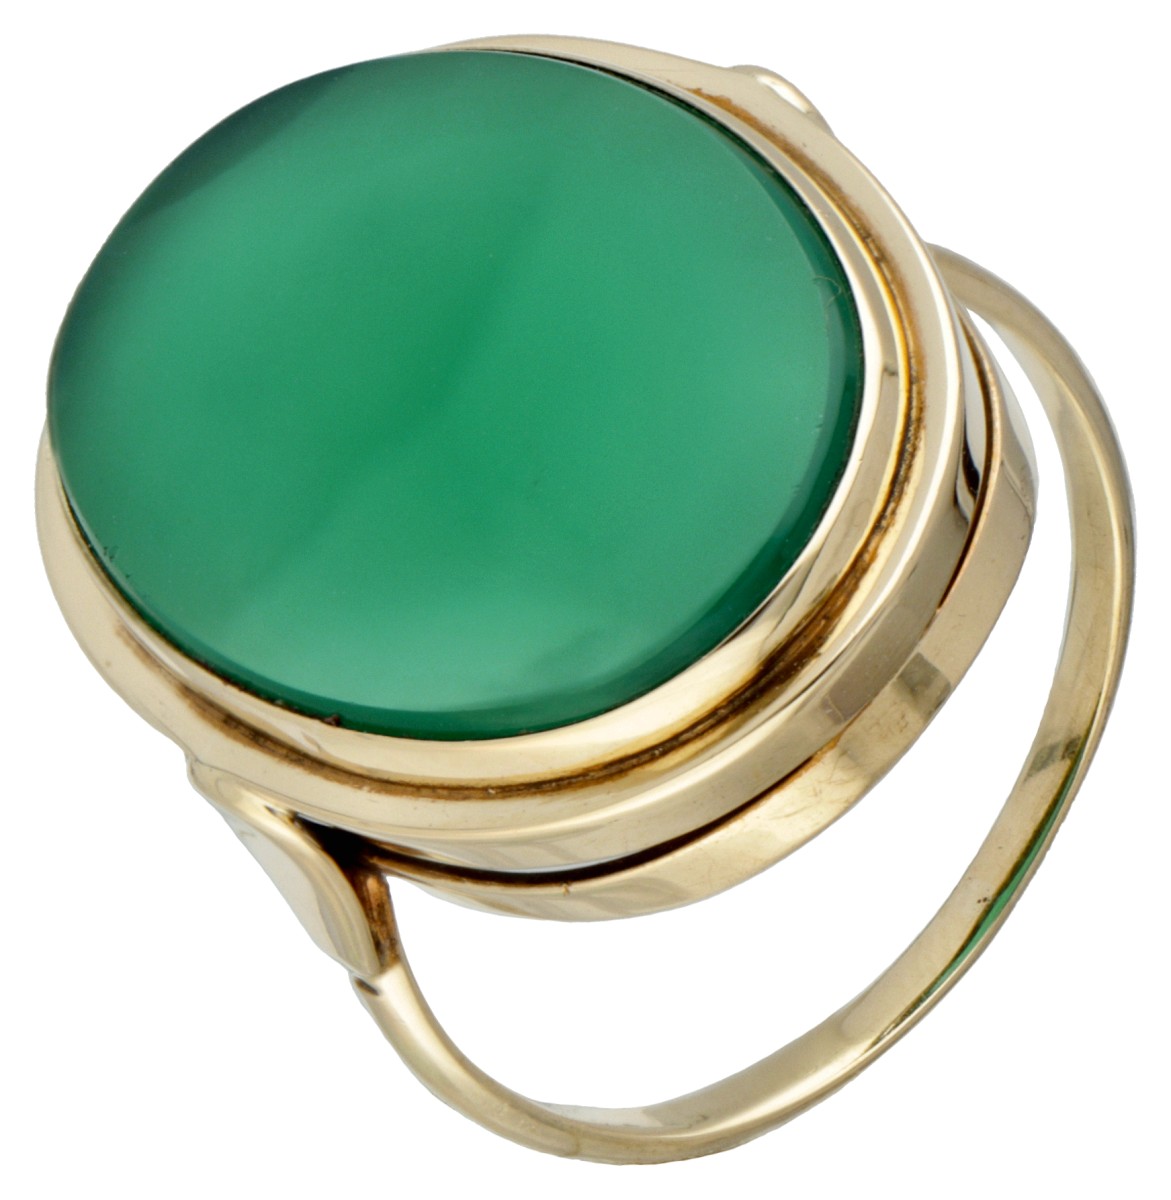 Vintage 14 kt. geelgouden ring bezet met ca. 6.15 ct. chrysophraas.